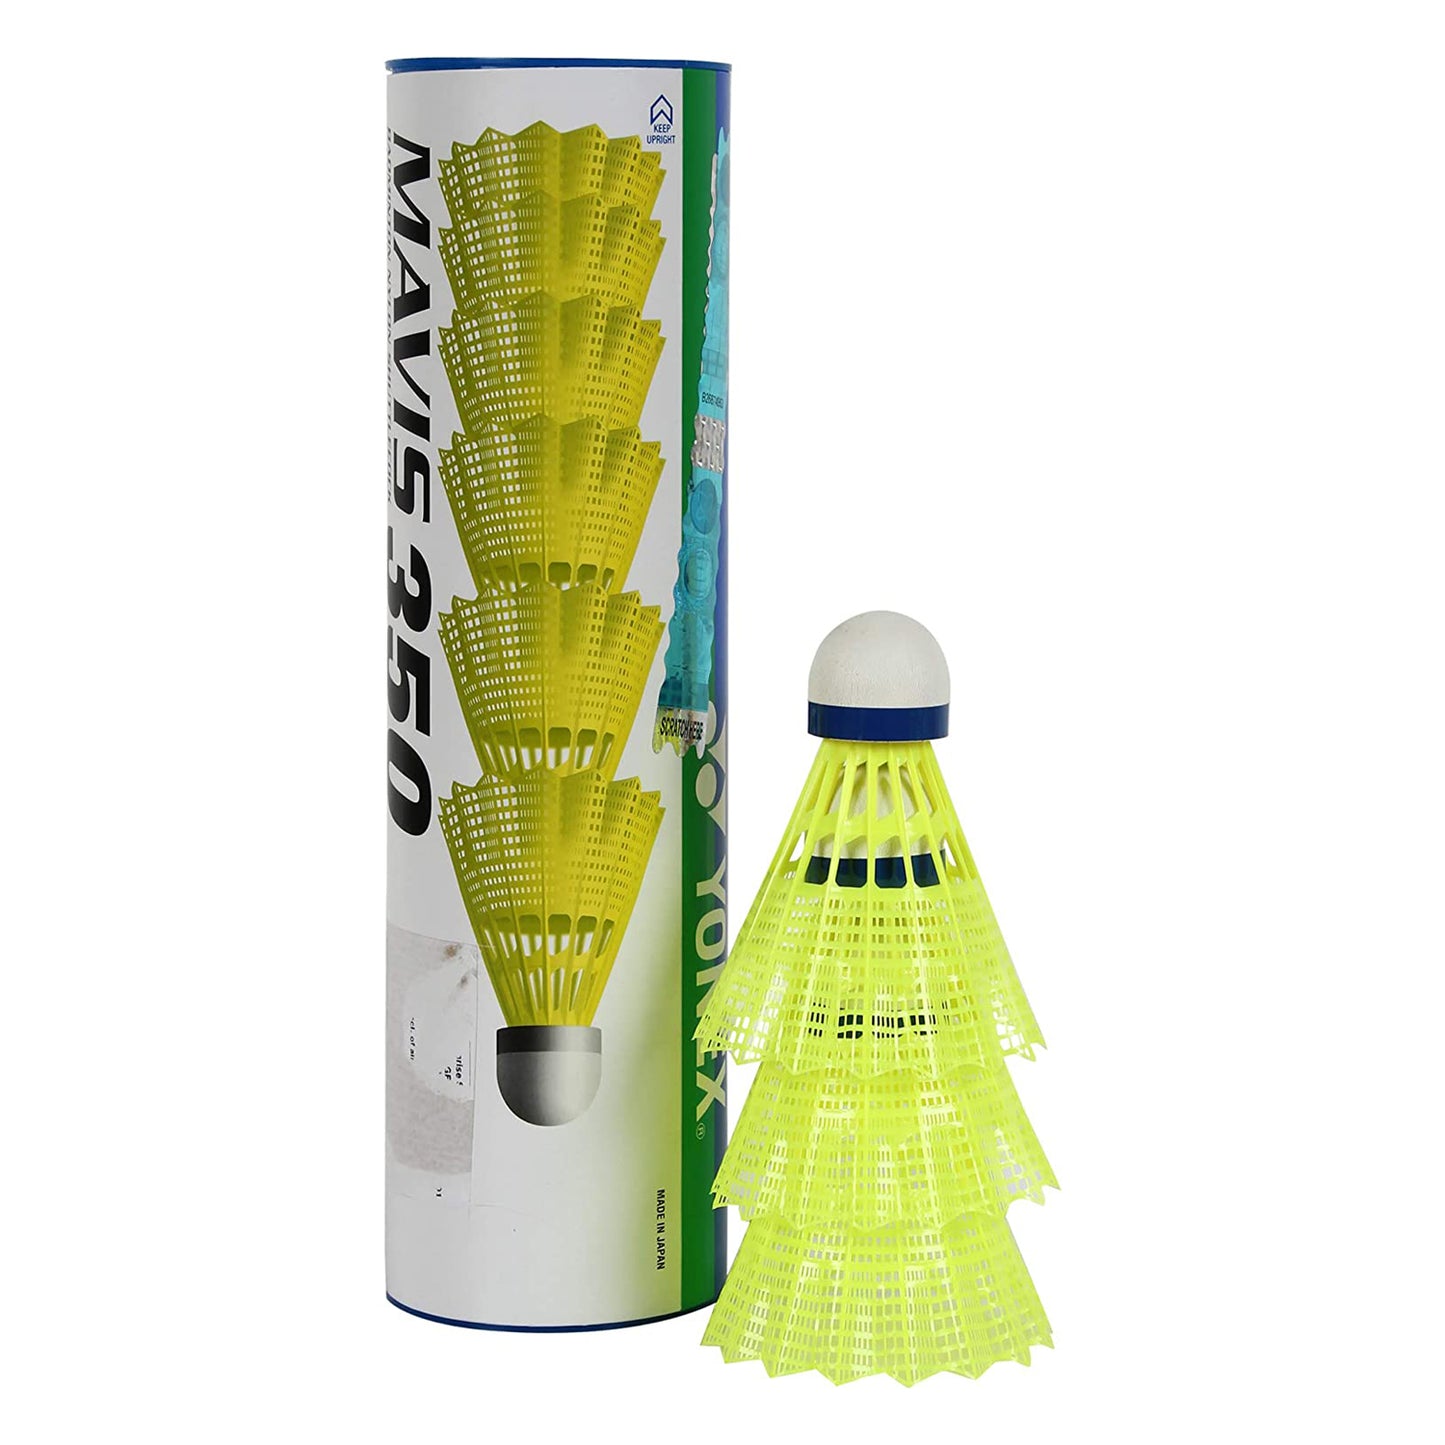 Yonex Mavis 350 Nylon Badminton Shuttlecock Blue Cap - 1 Can (Yellow) - Best Price online Prokicksports.com